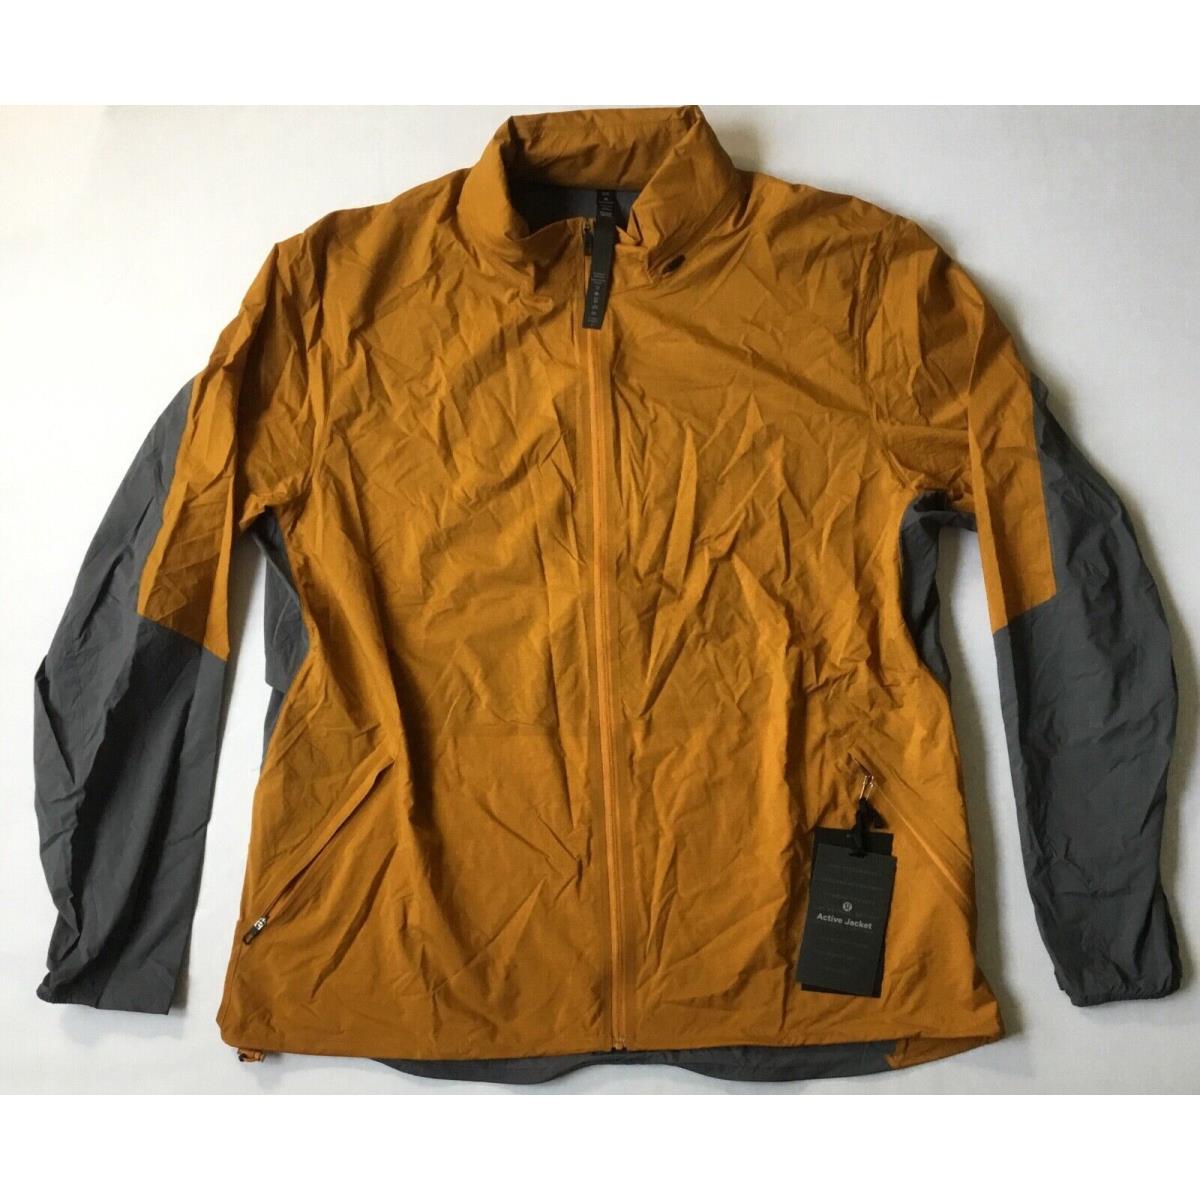 Lululemon Men s Active Jacket Fsgd/anch Yellow LM4686S Size XL